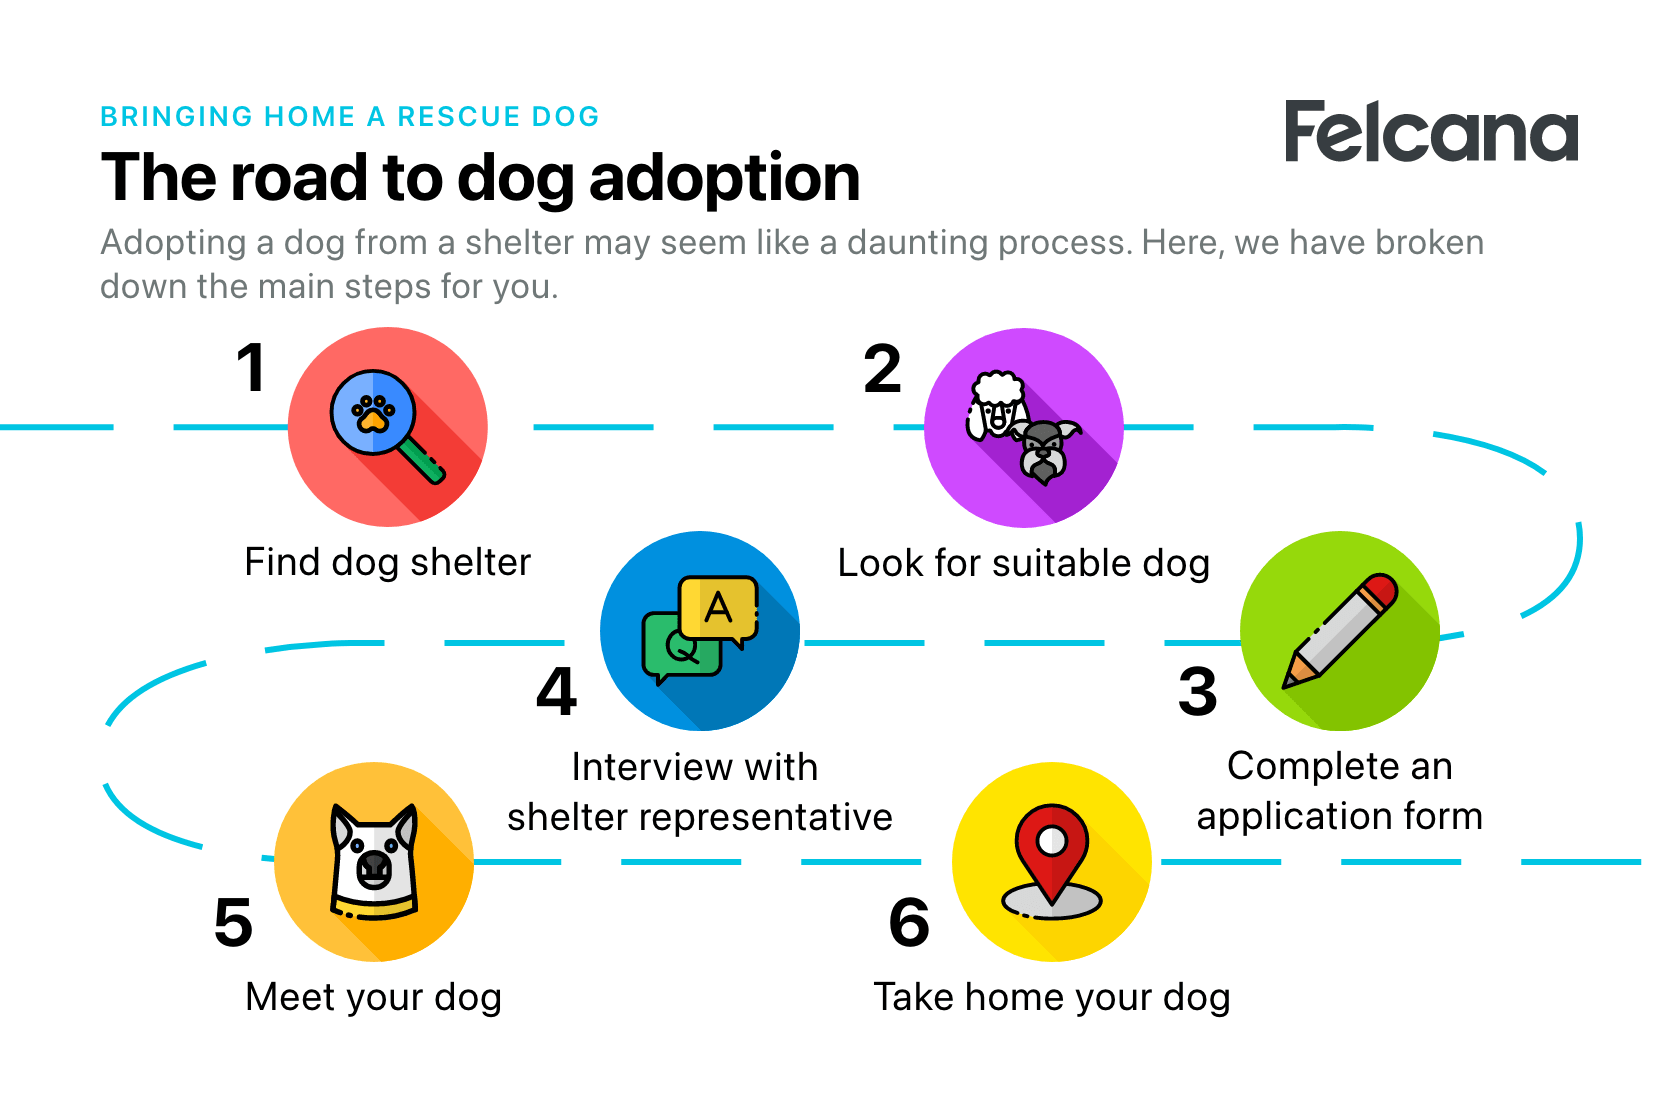 Dog adoption procedure and timeline